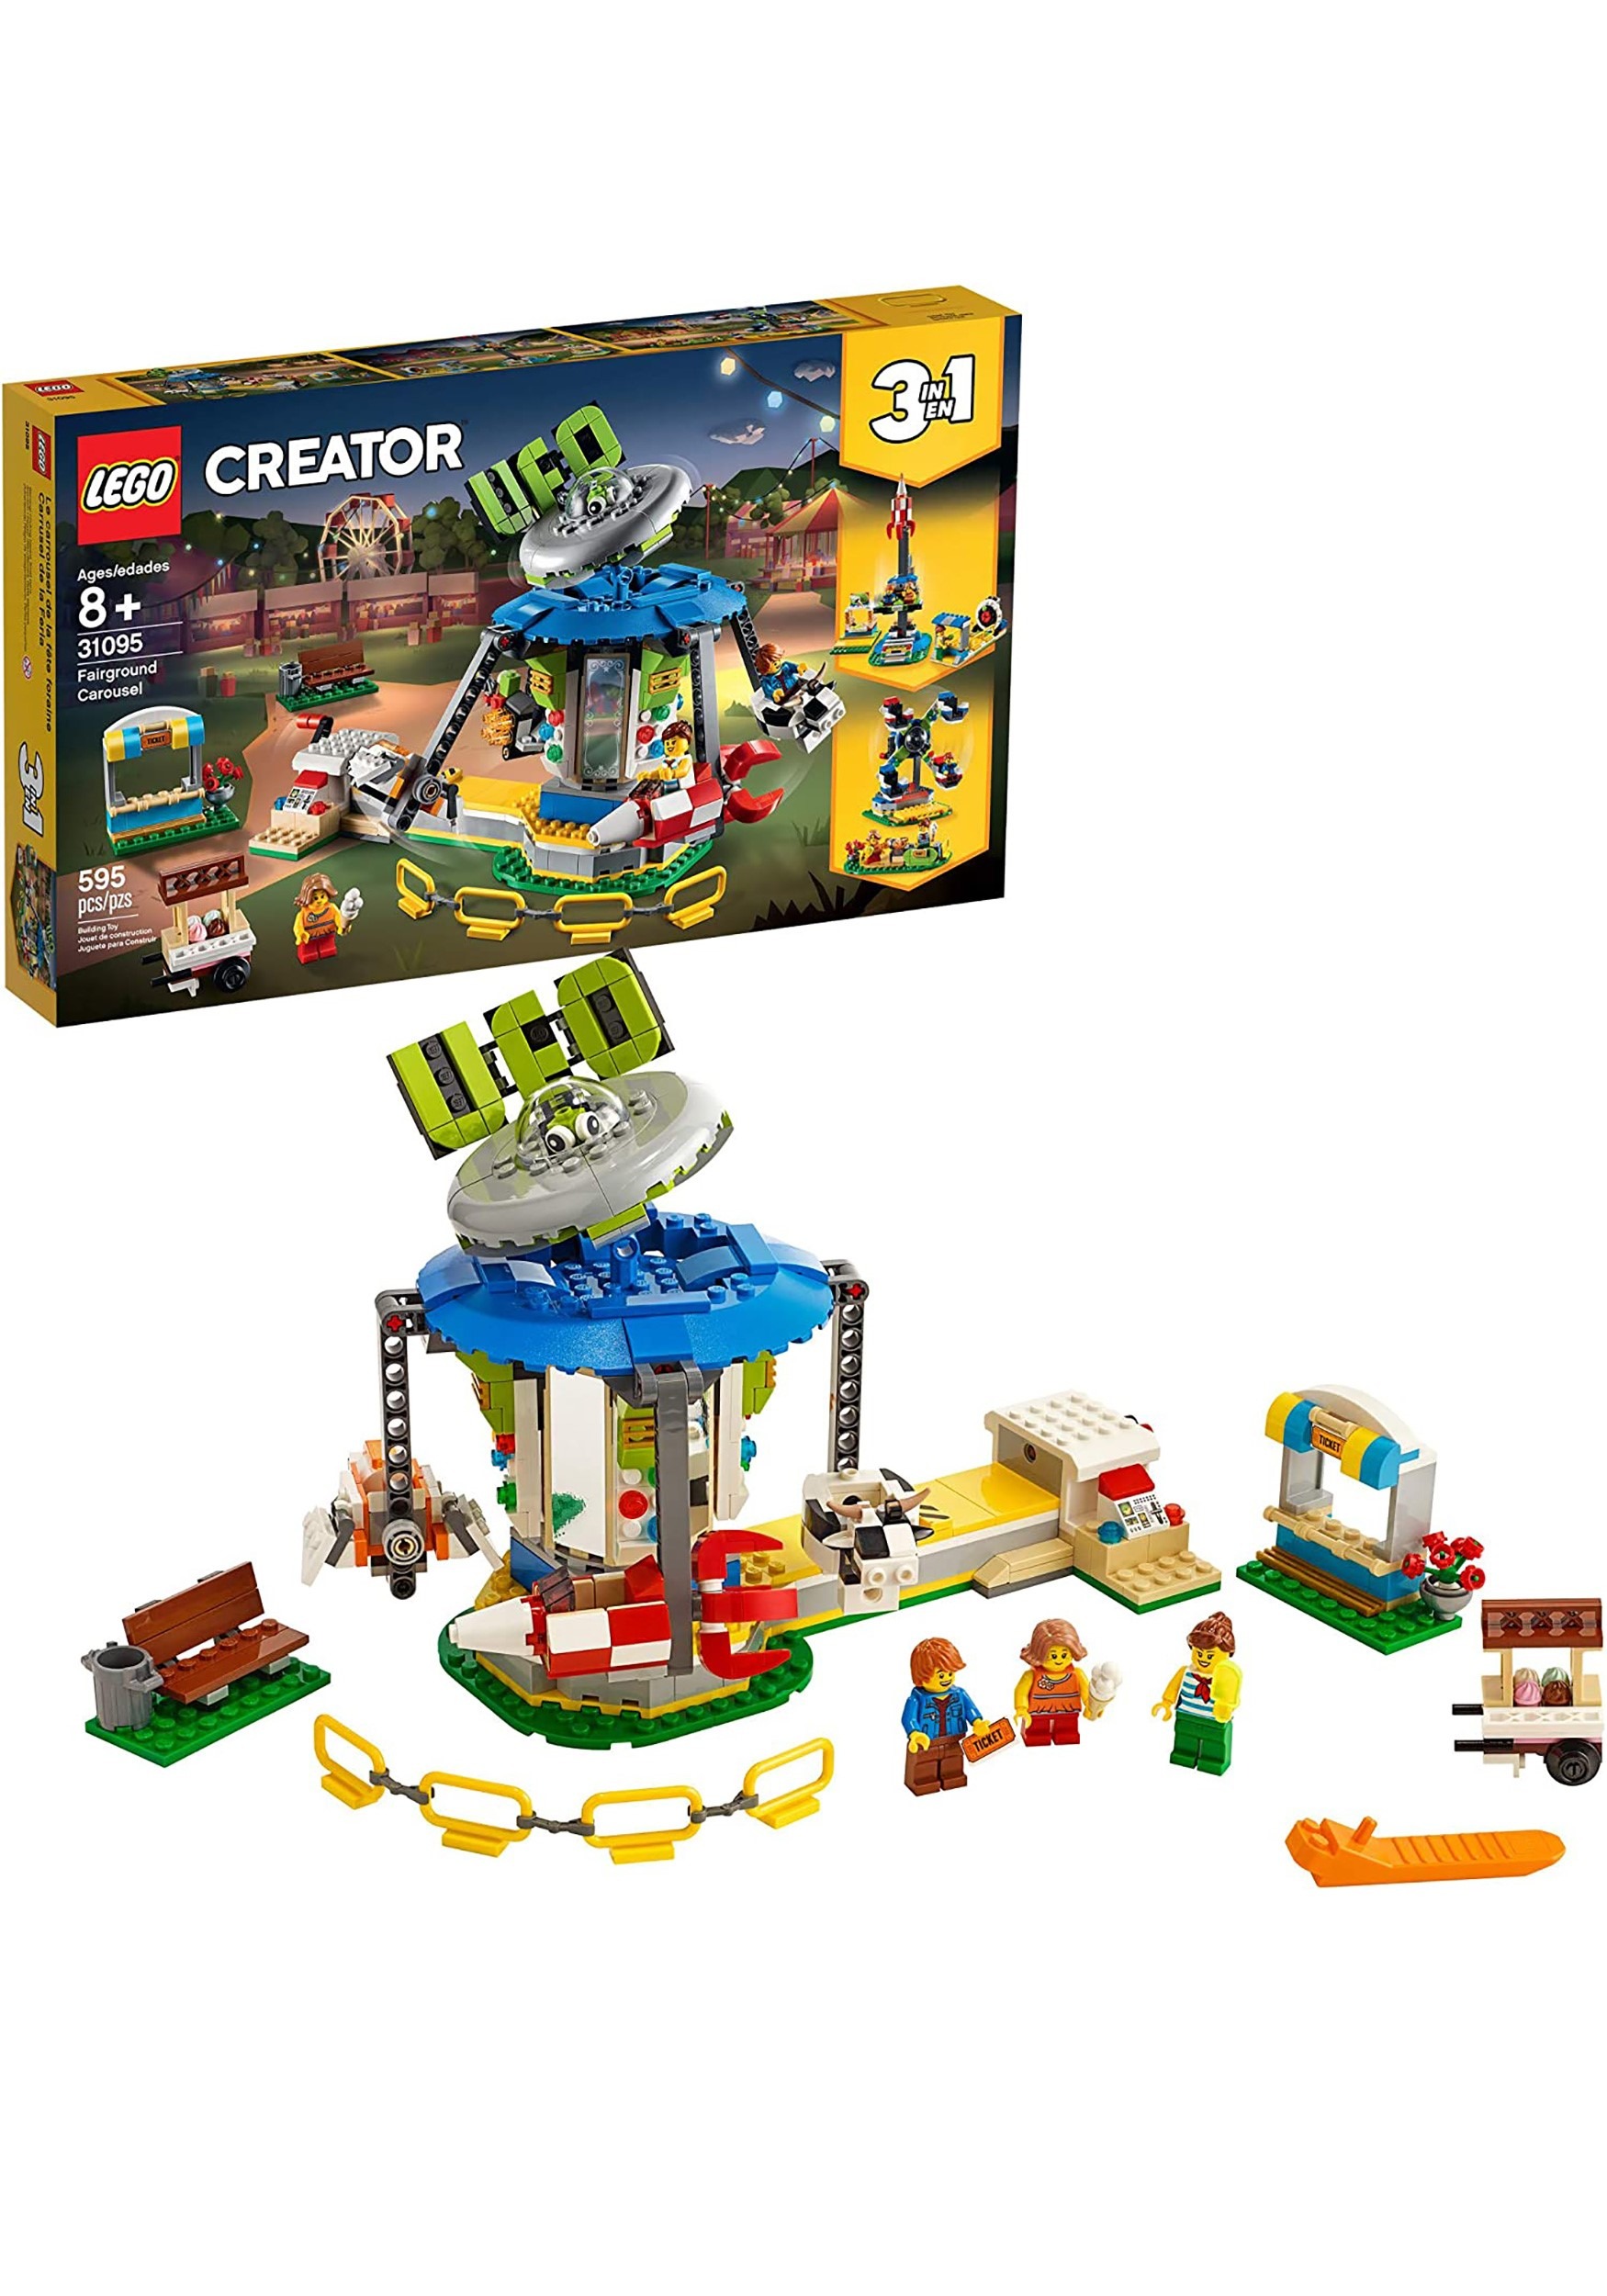 Fairground Carousel LEGO Creator Building Set